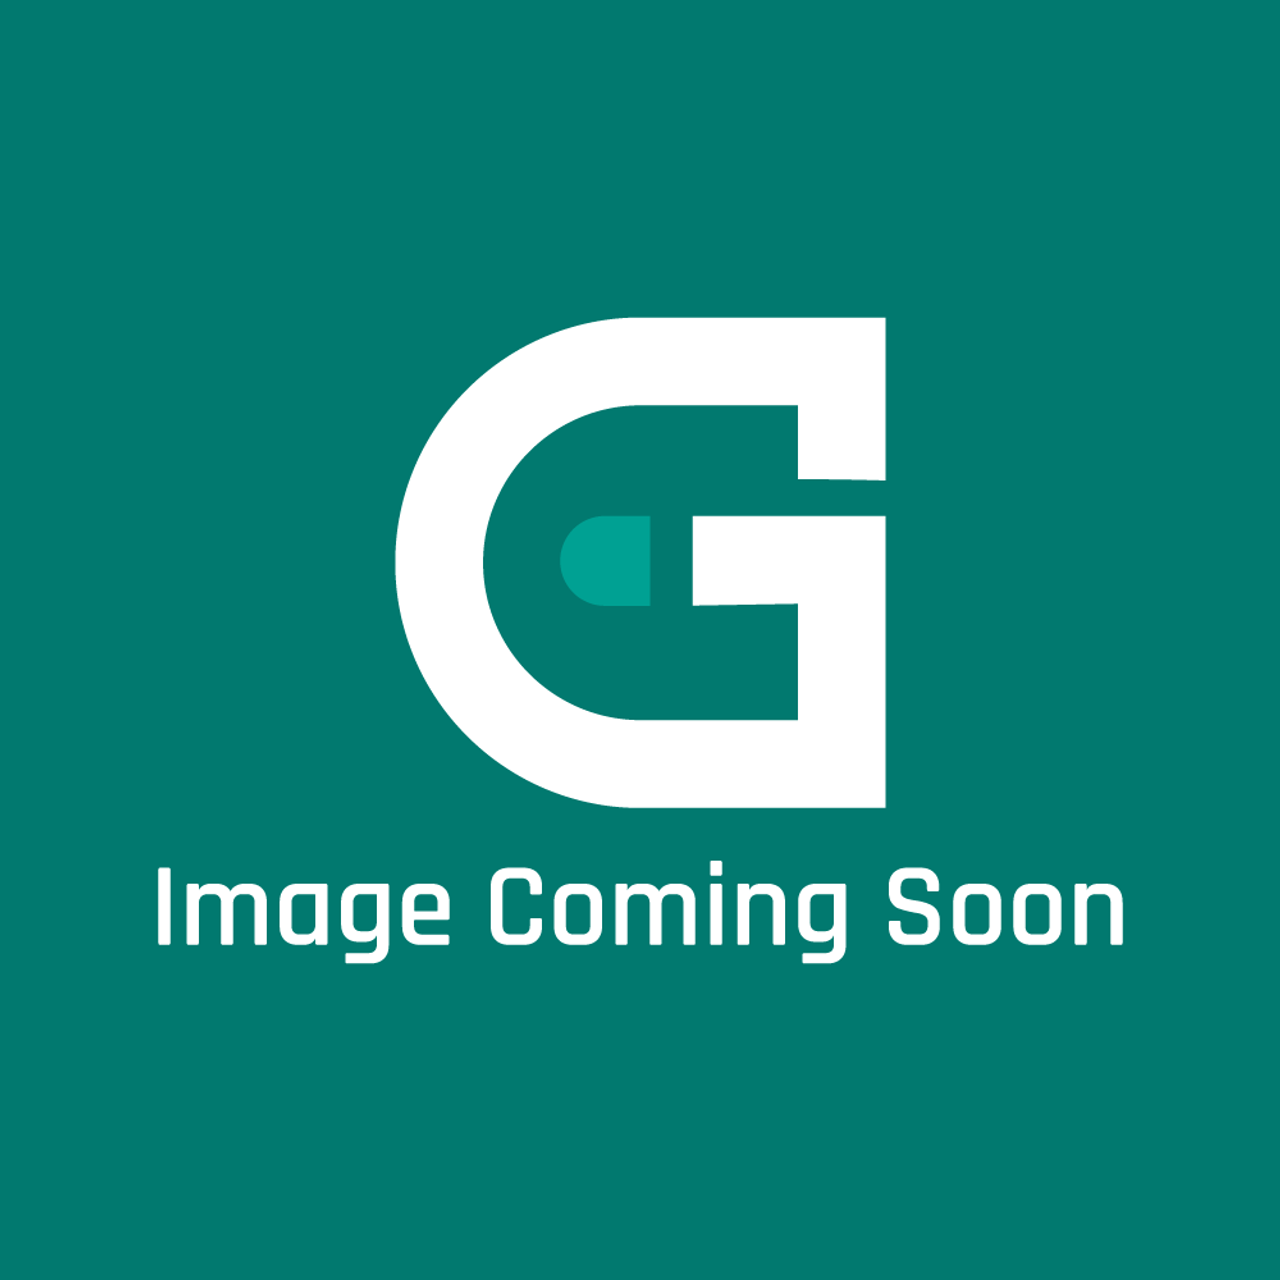 GE Appliances WB34X38734 - Gear Motor Box - Image Coming Soon!